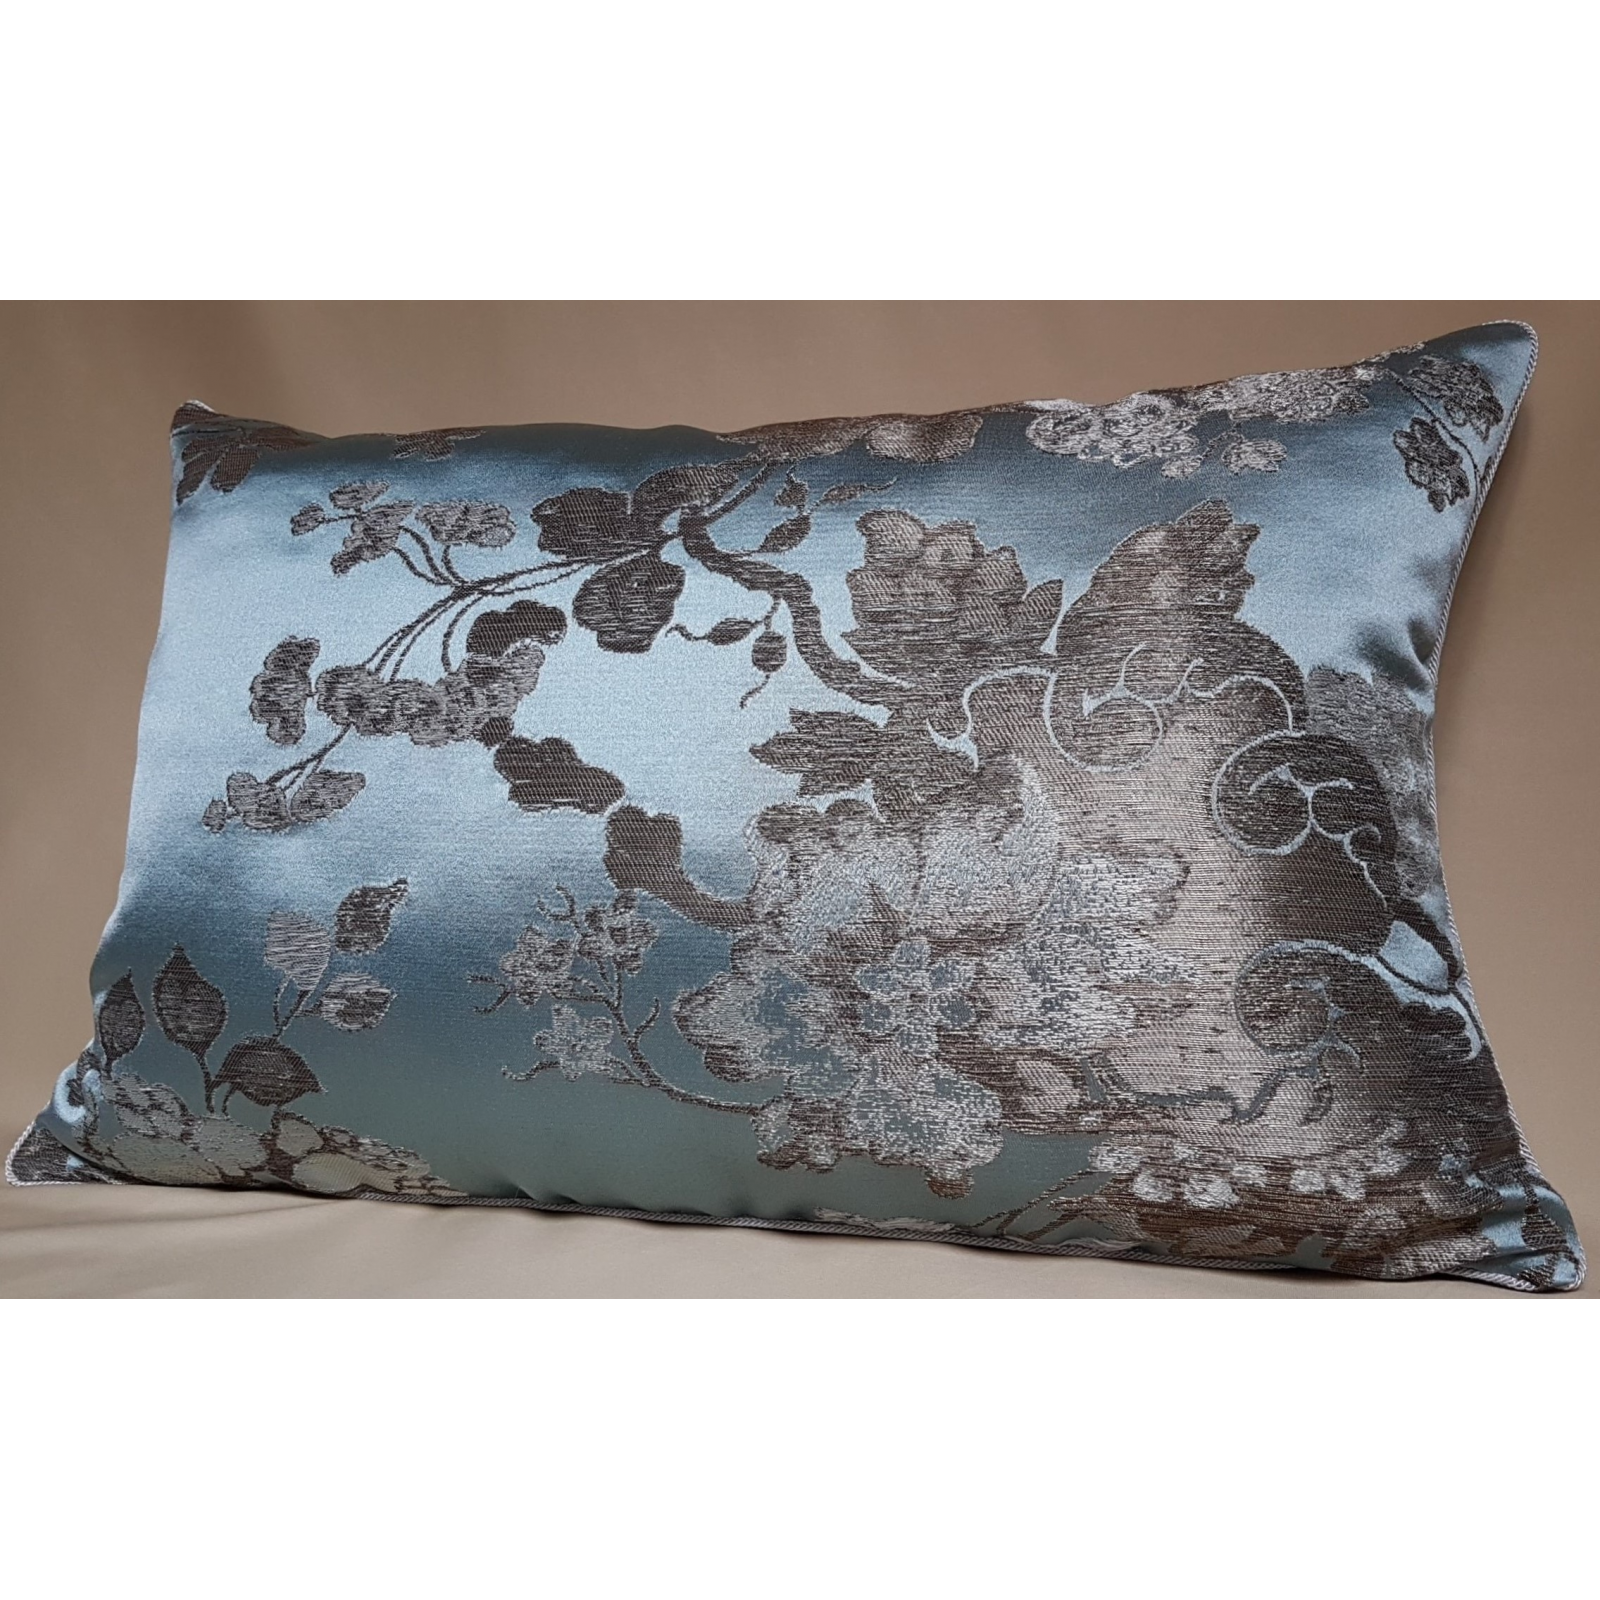 Luxury Pillow Case with Tassel Trim Silk Brocade Rubelli Fabric